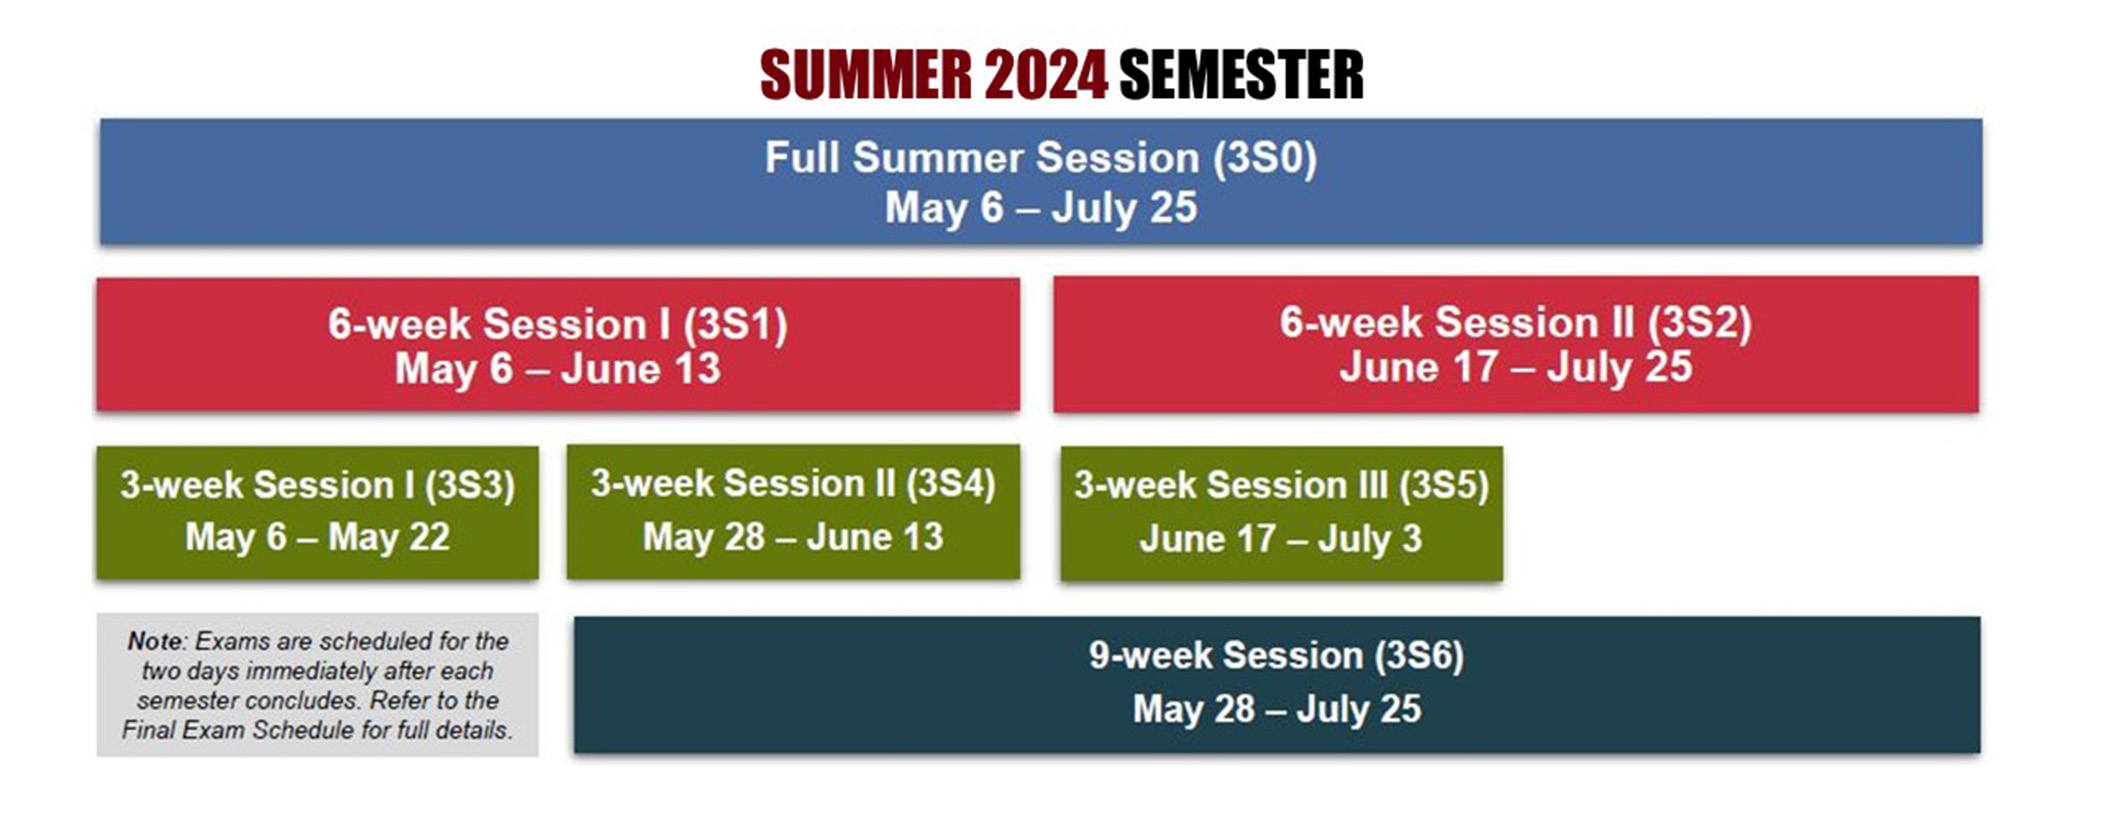 Summer 2024 Schedule - University Registrar | University of South Carolina